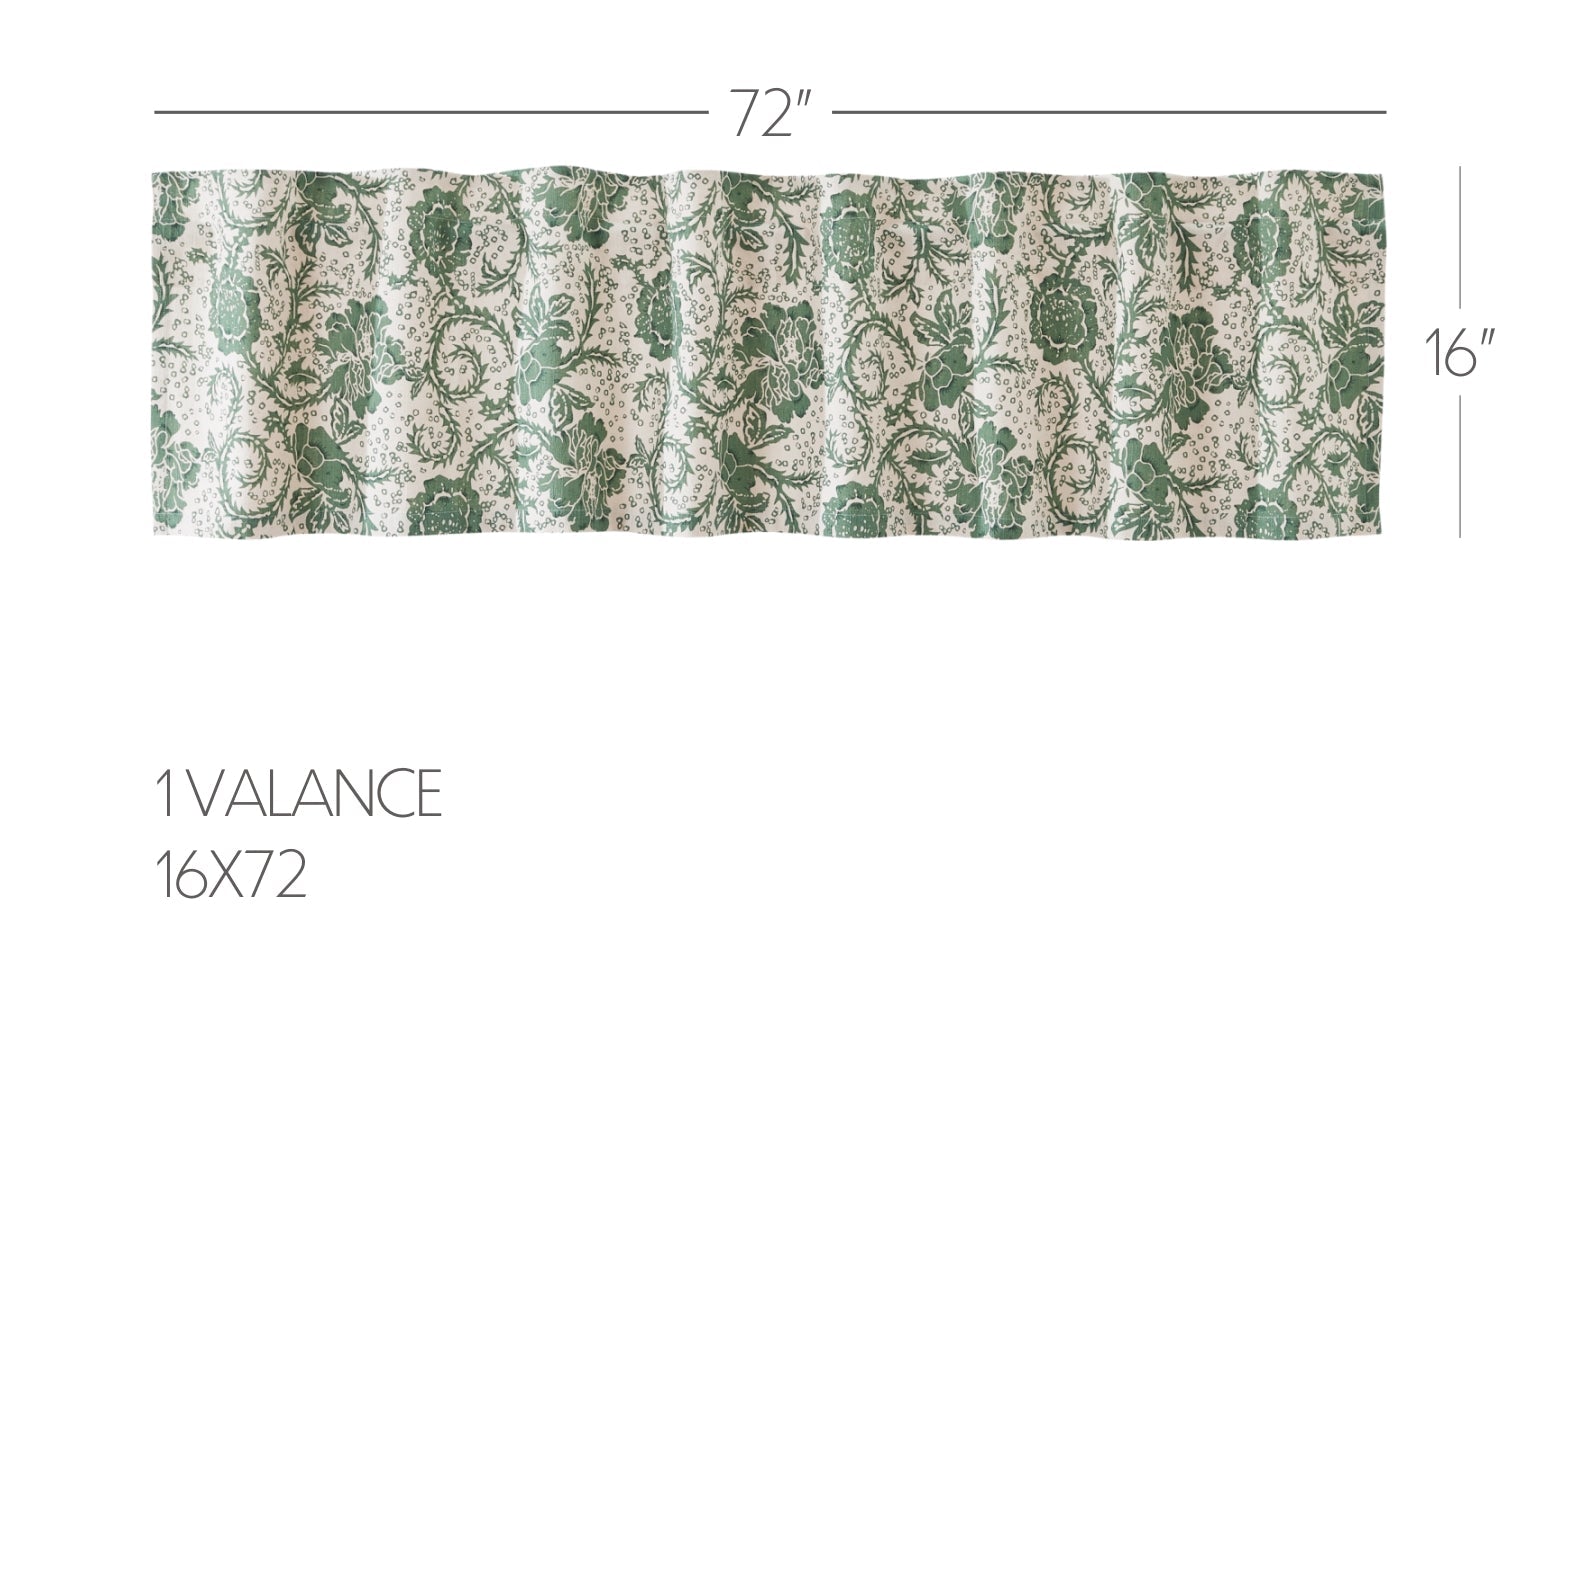 Dorset Green Floral Valance Curtain 16x72 VHC Brands